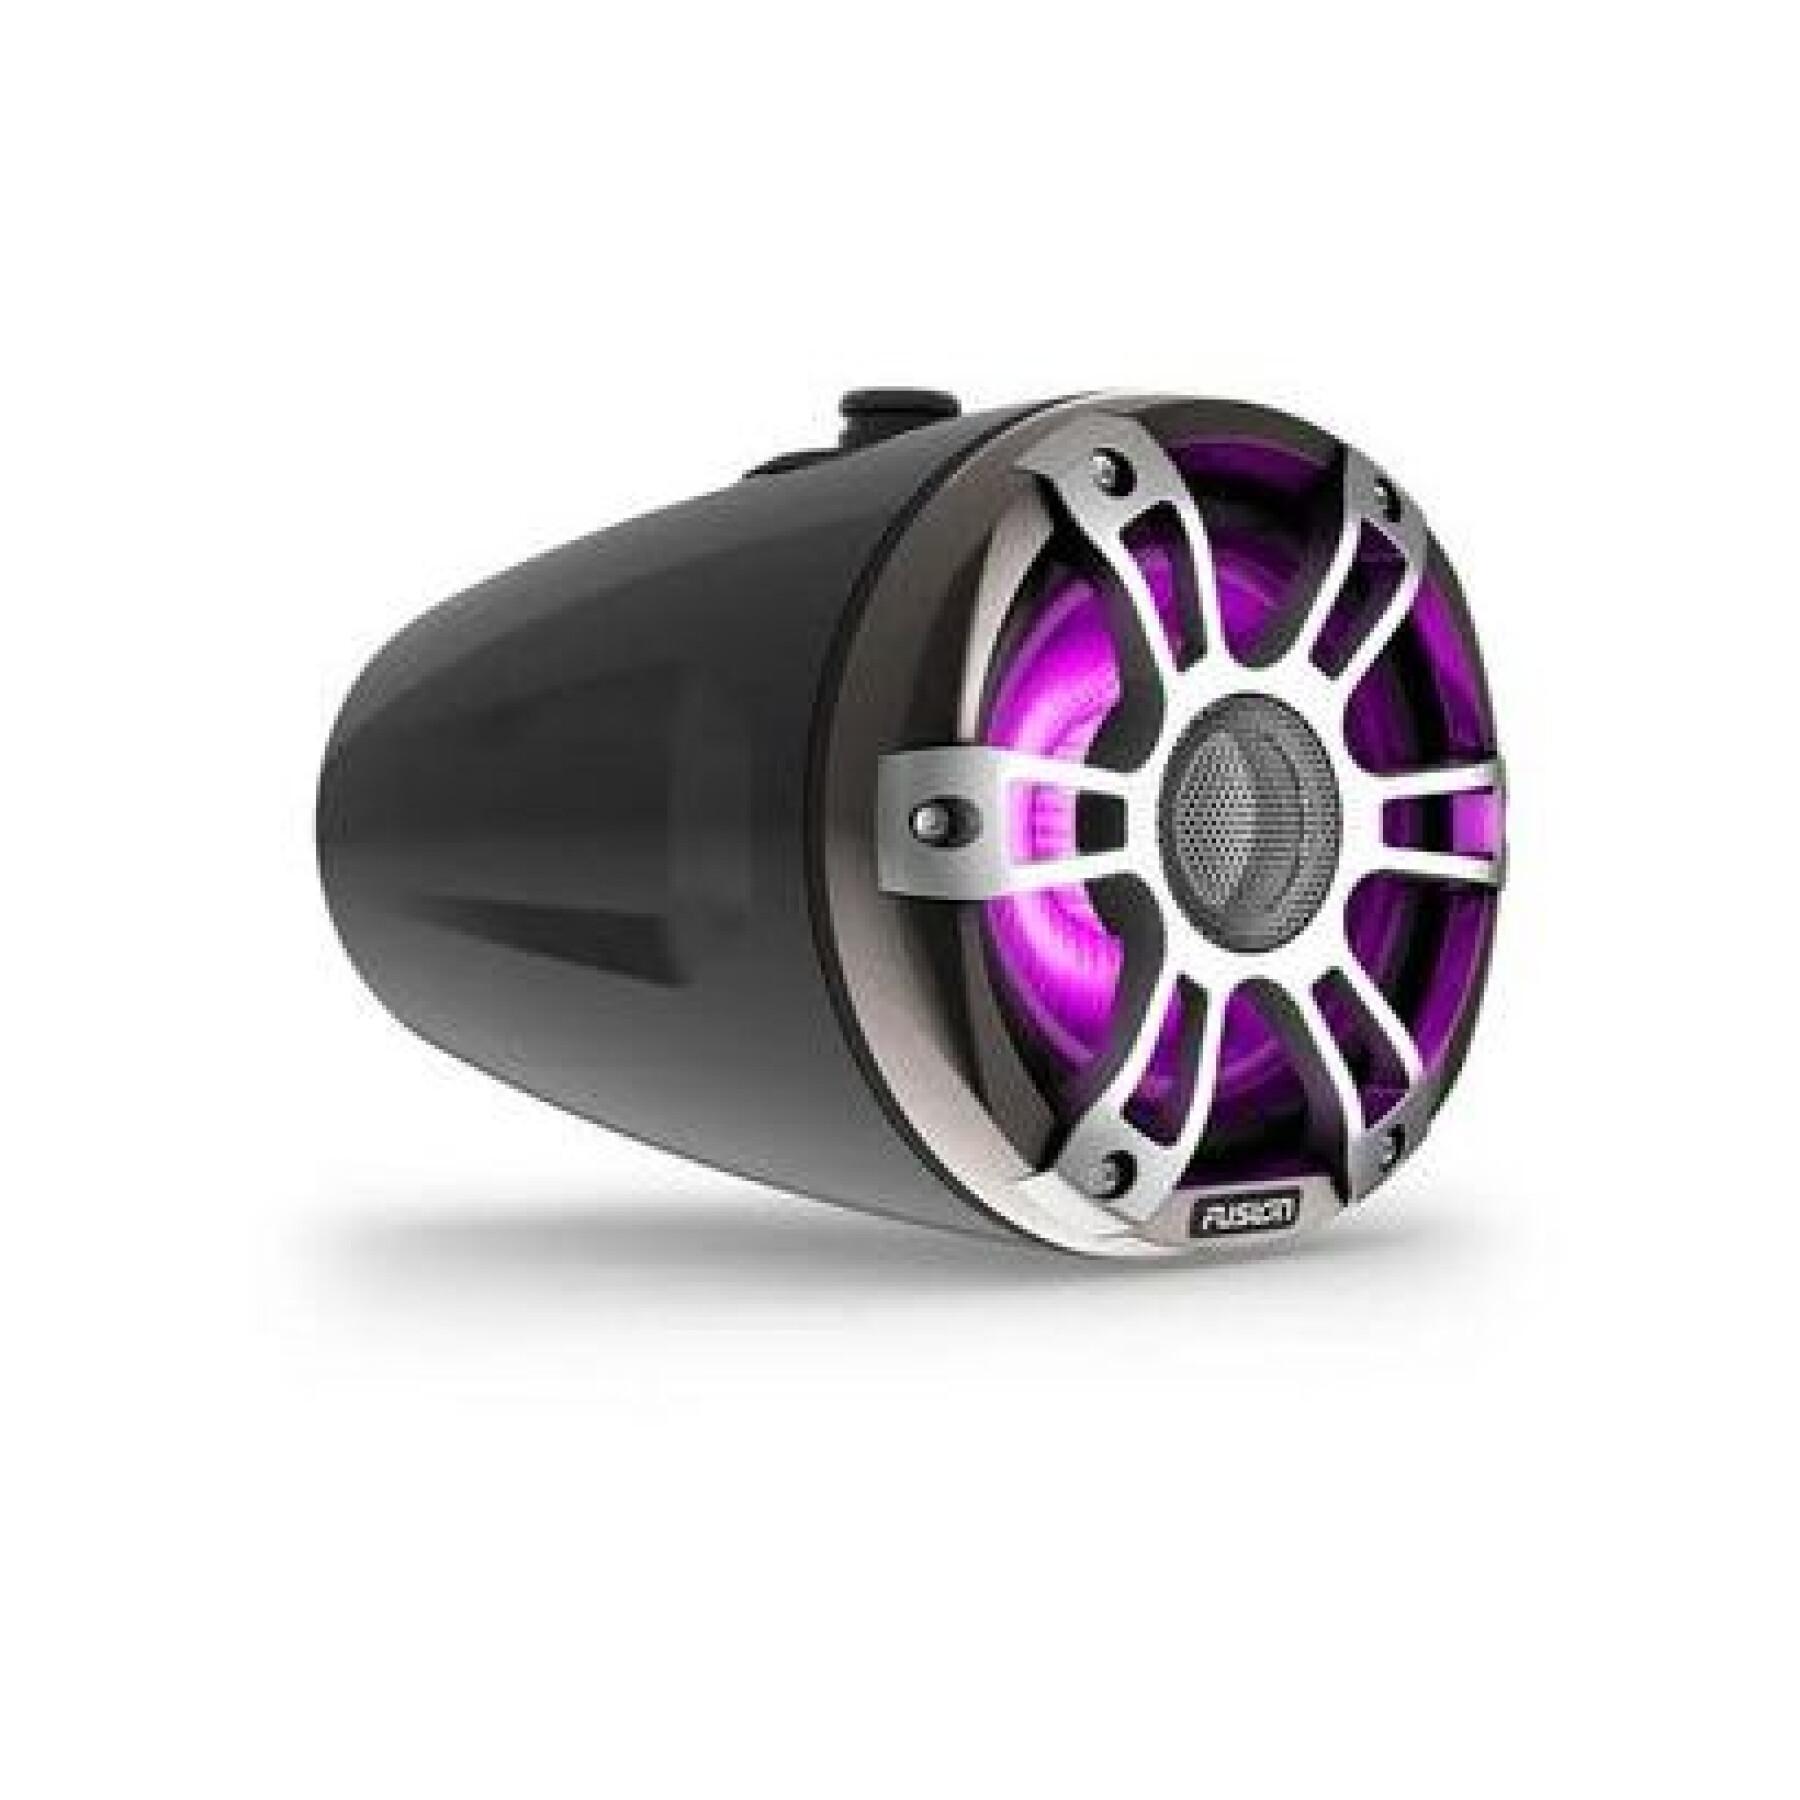 Orador Fusion HP Wake Tower Signature 3i Sport 6.5"